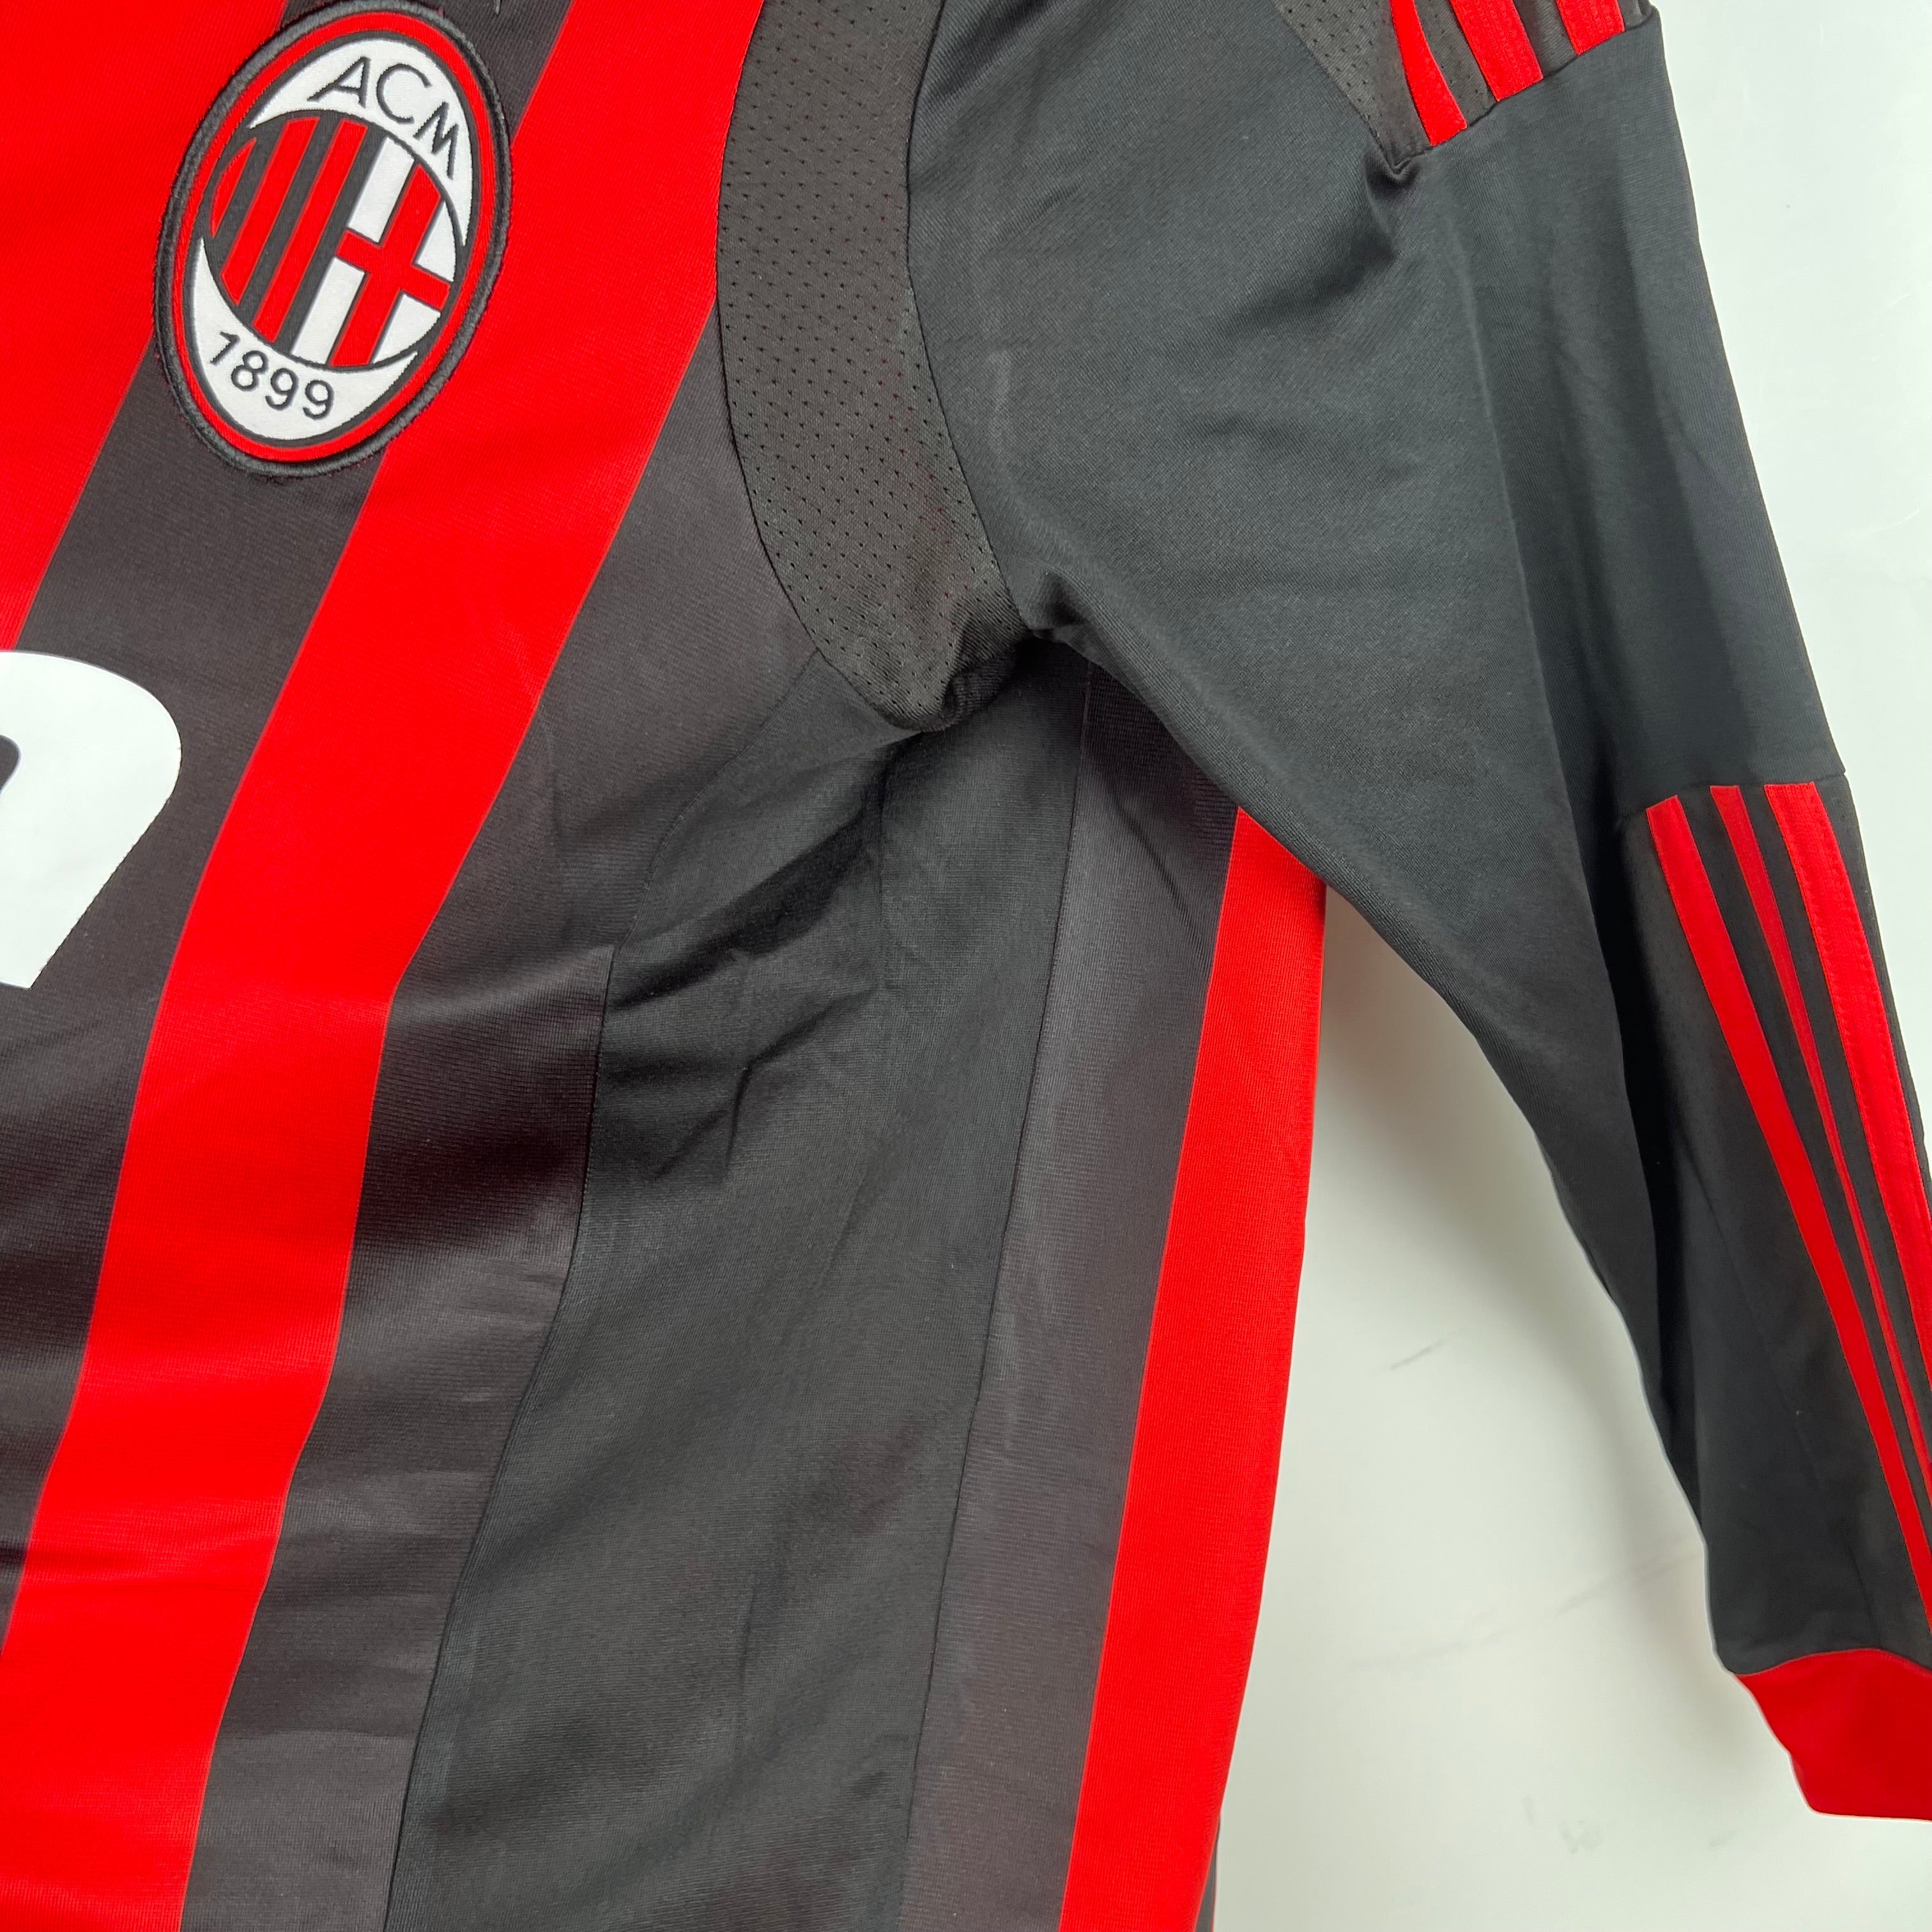 AC Milan 09-10 | Long Sleeve | Retro Home